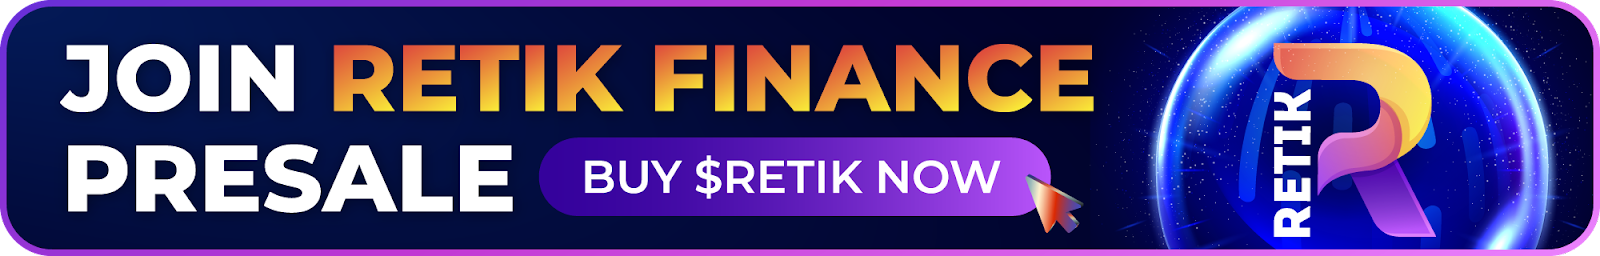 Vend $2000 til $500,000 med Retik Finance (RETIK), Shiba Inu (SHIB) og Solana (SOL)